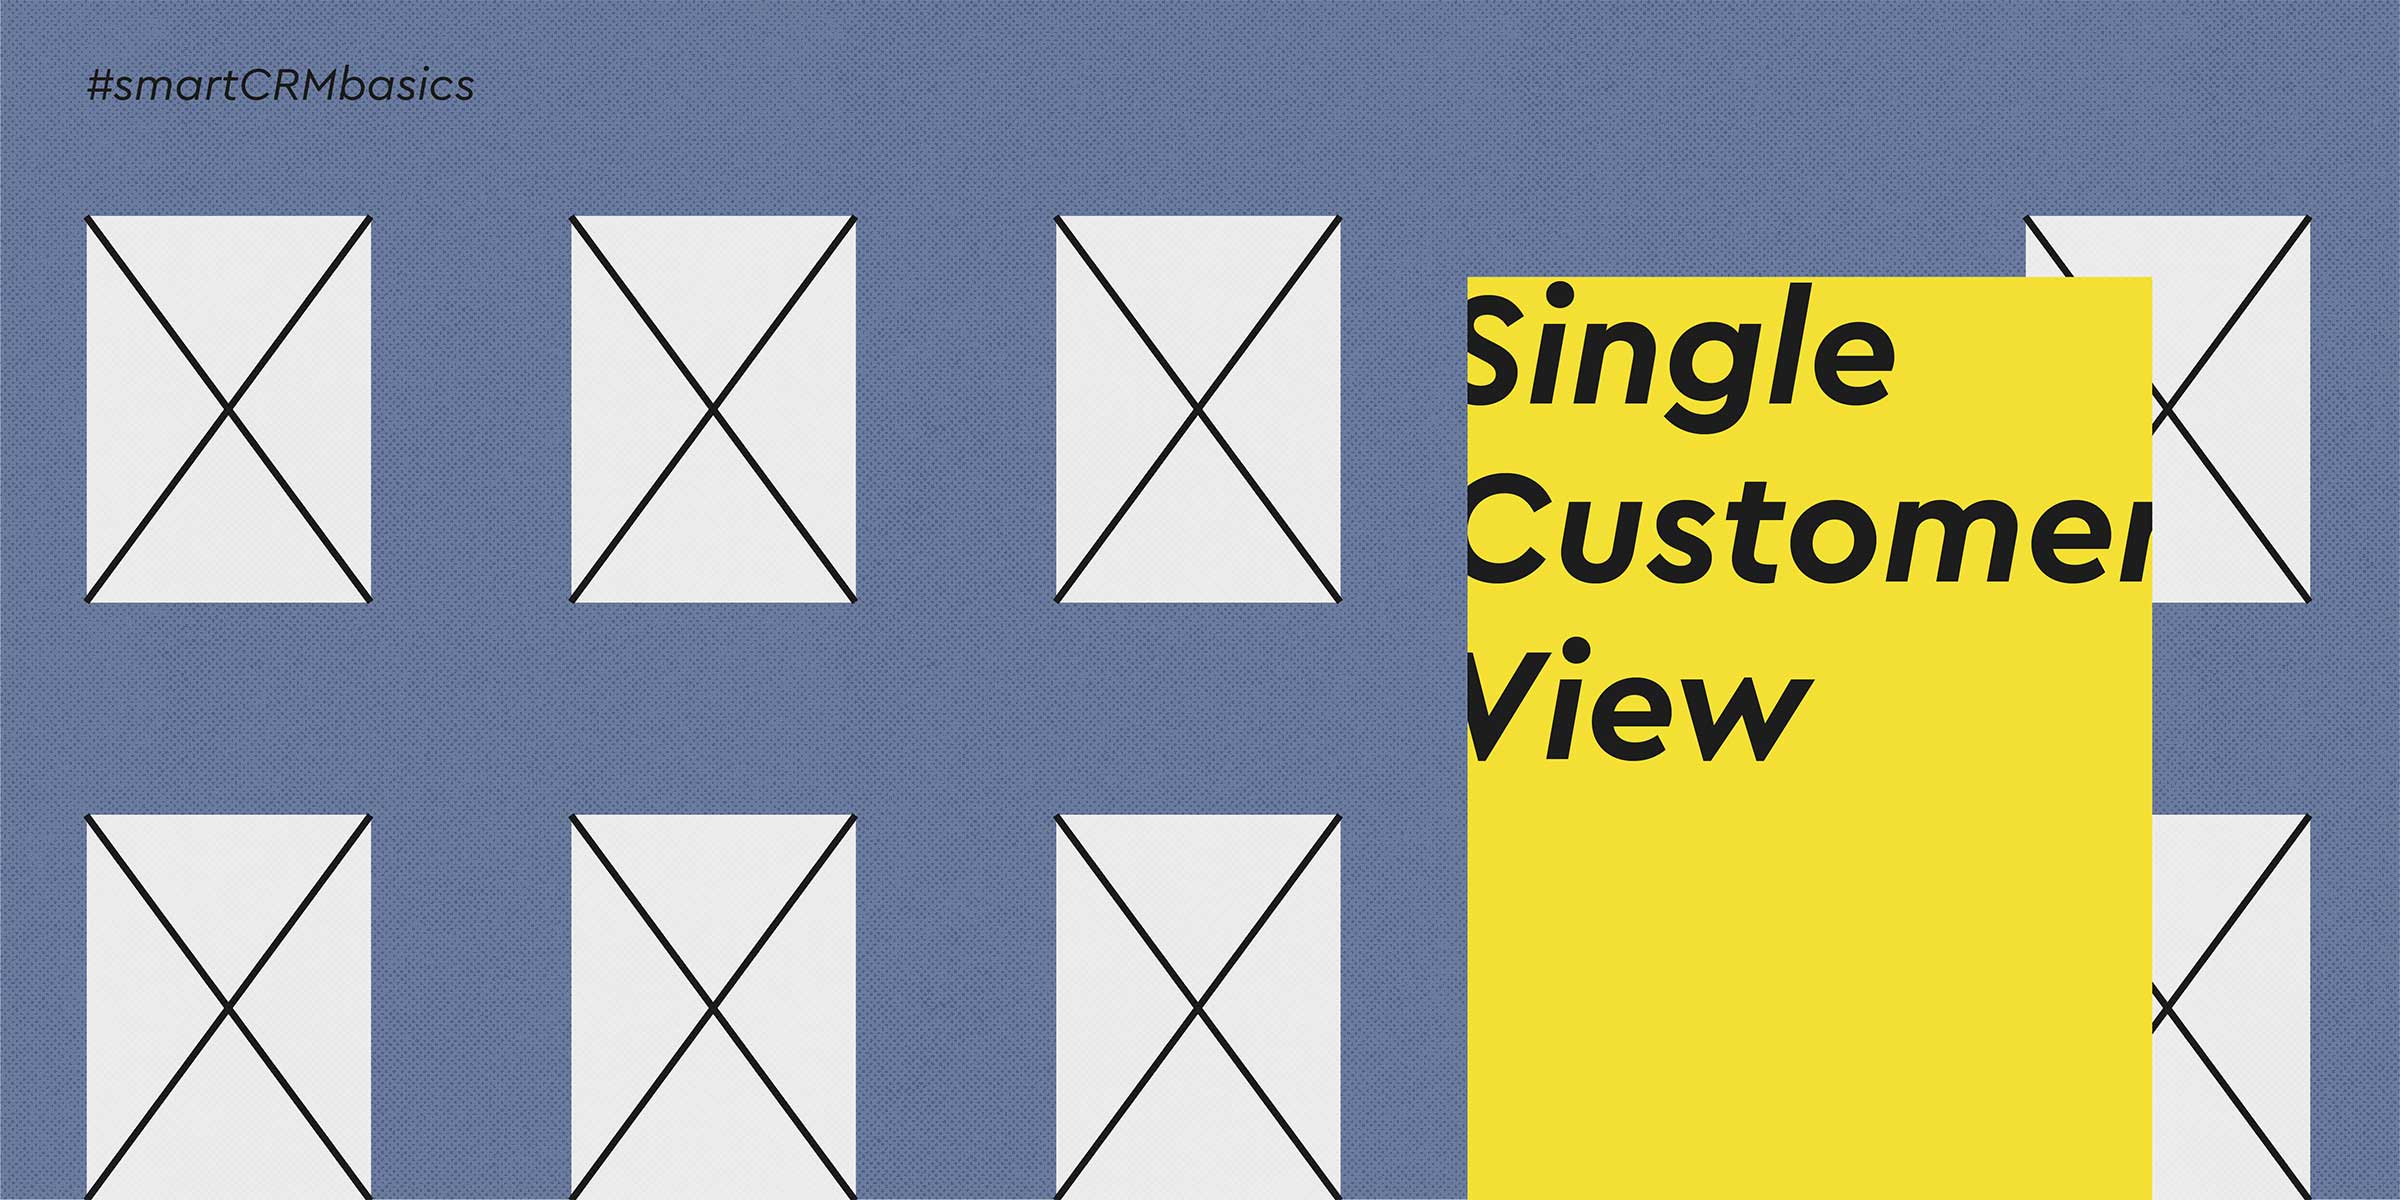 Smart CRM Basics: The Single Customer View